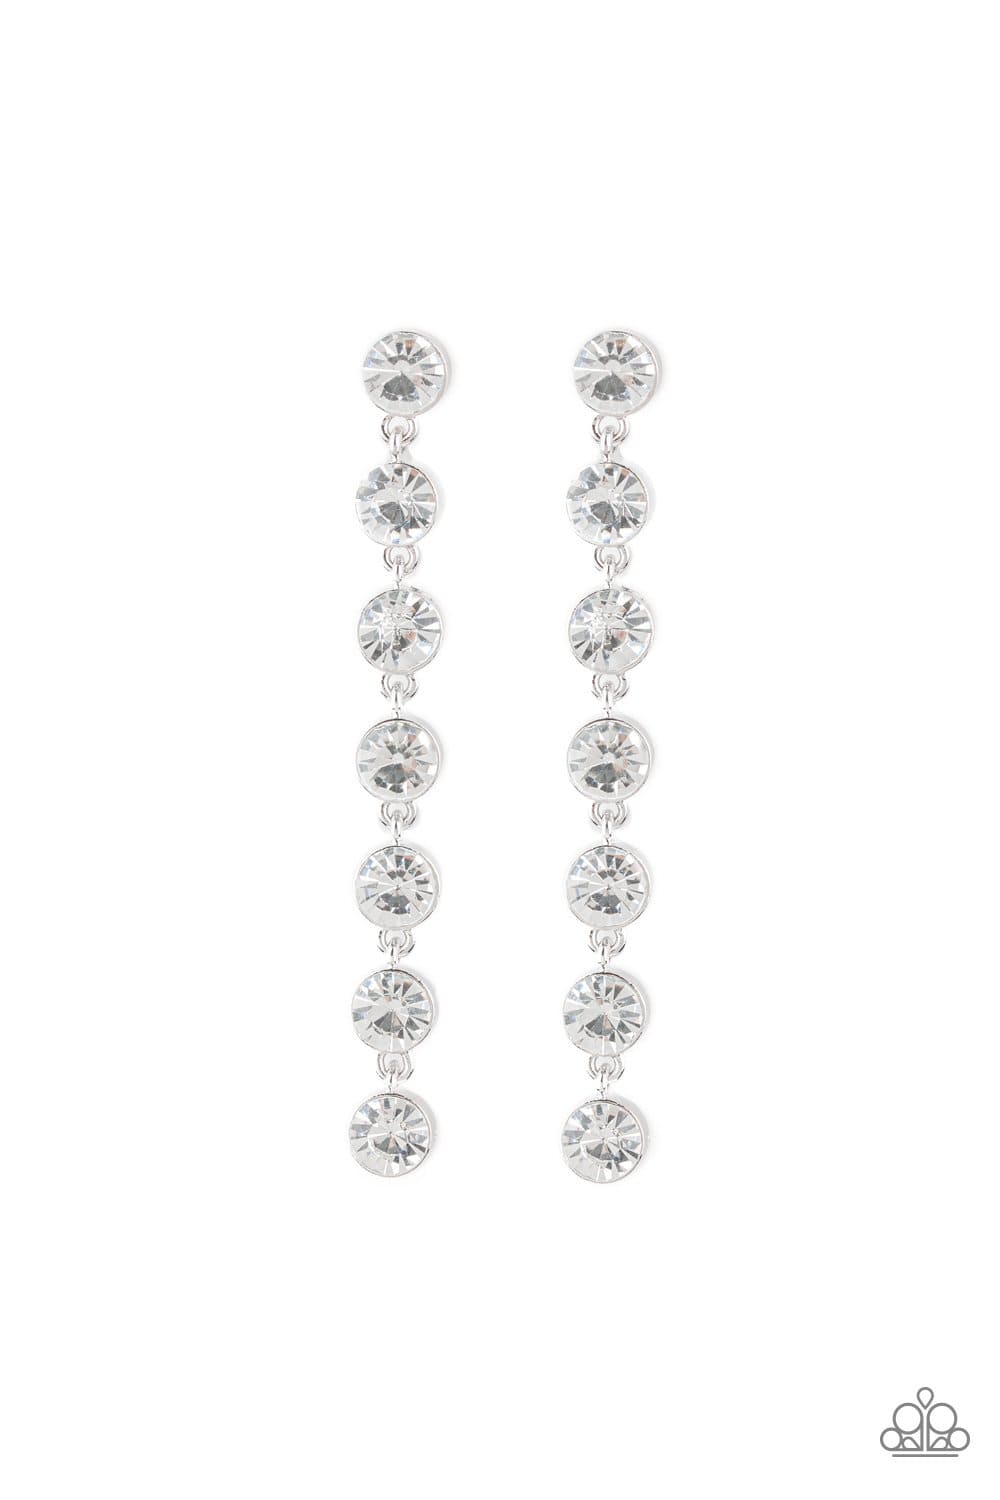 Paparazzi:Dazzling Debonair - White Rhinestone Earrings - Jewels N’ Thingz Boutique